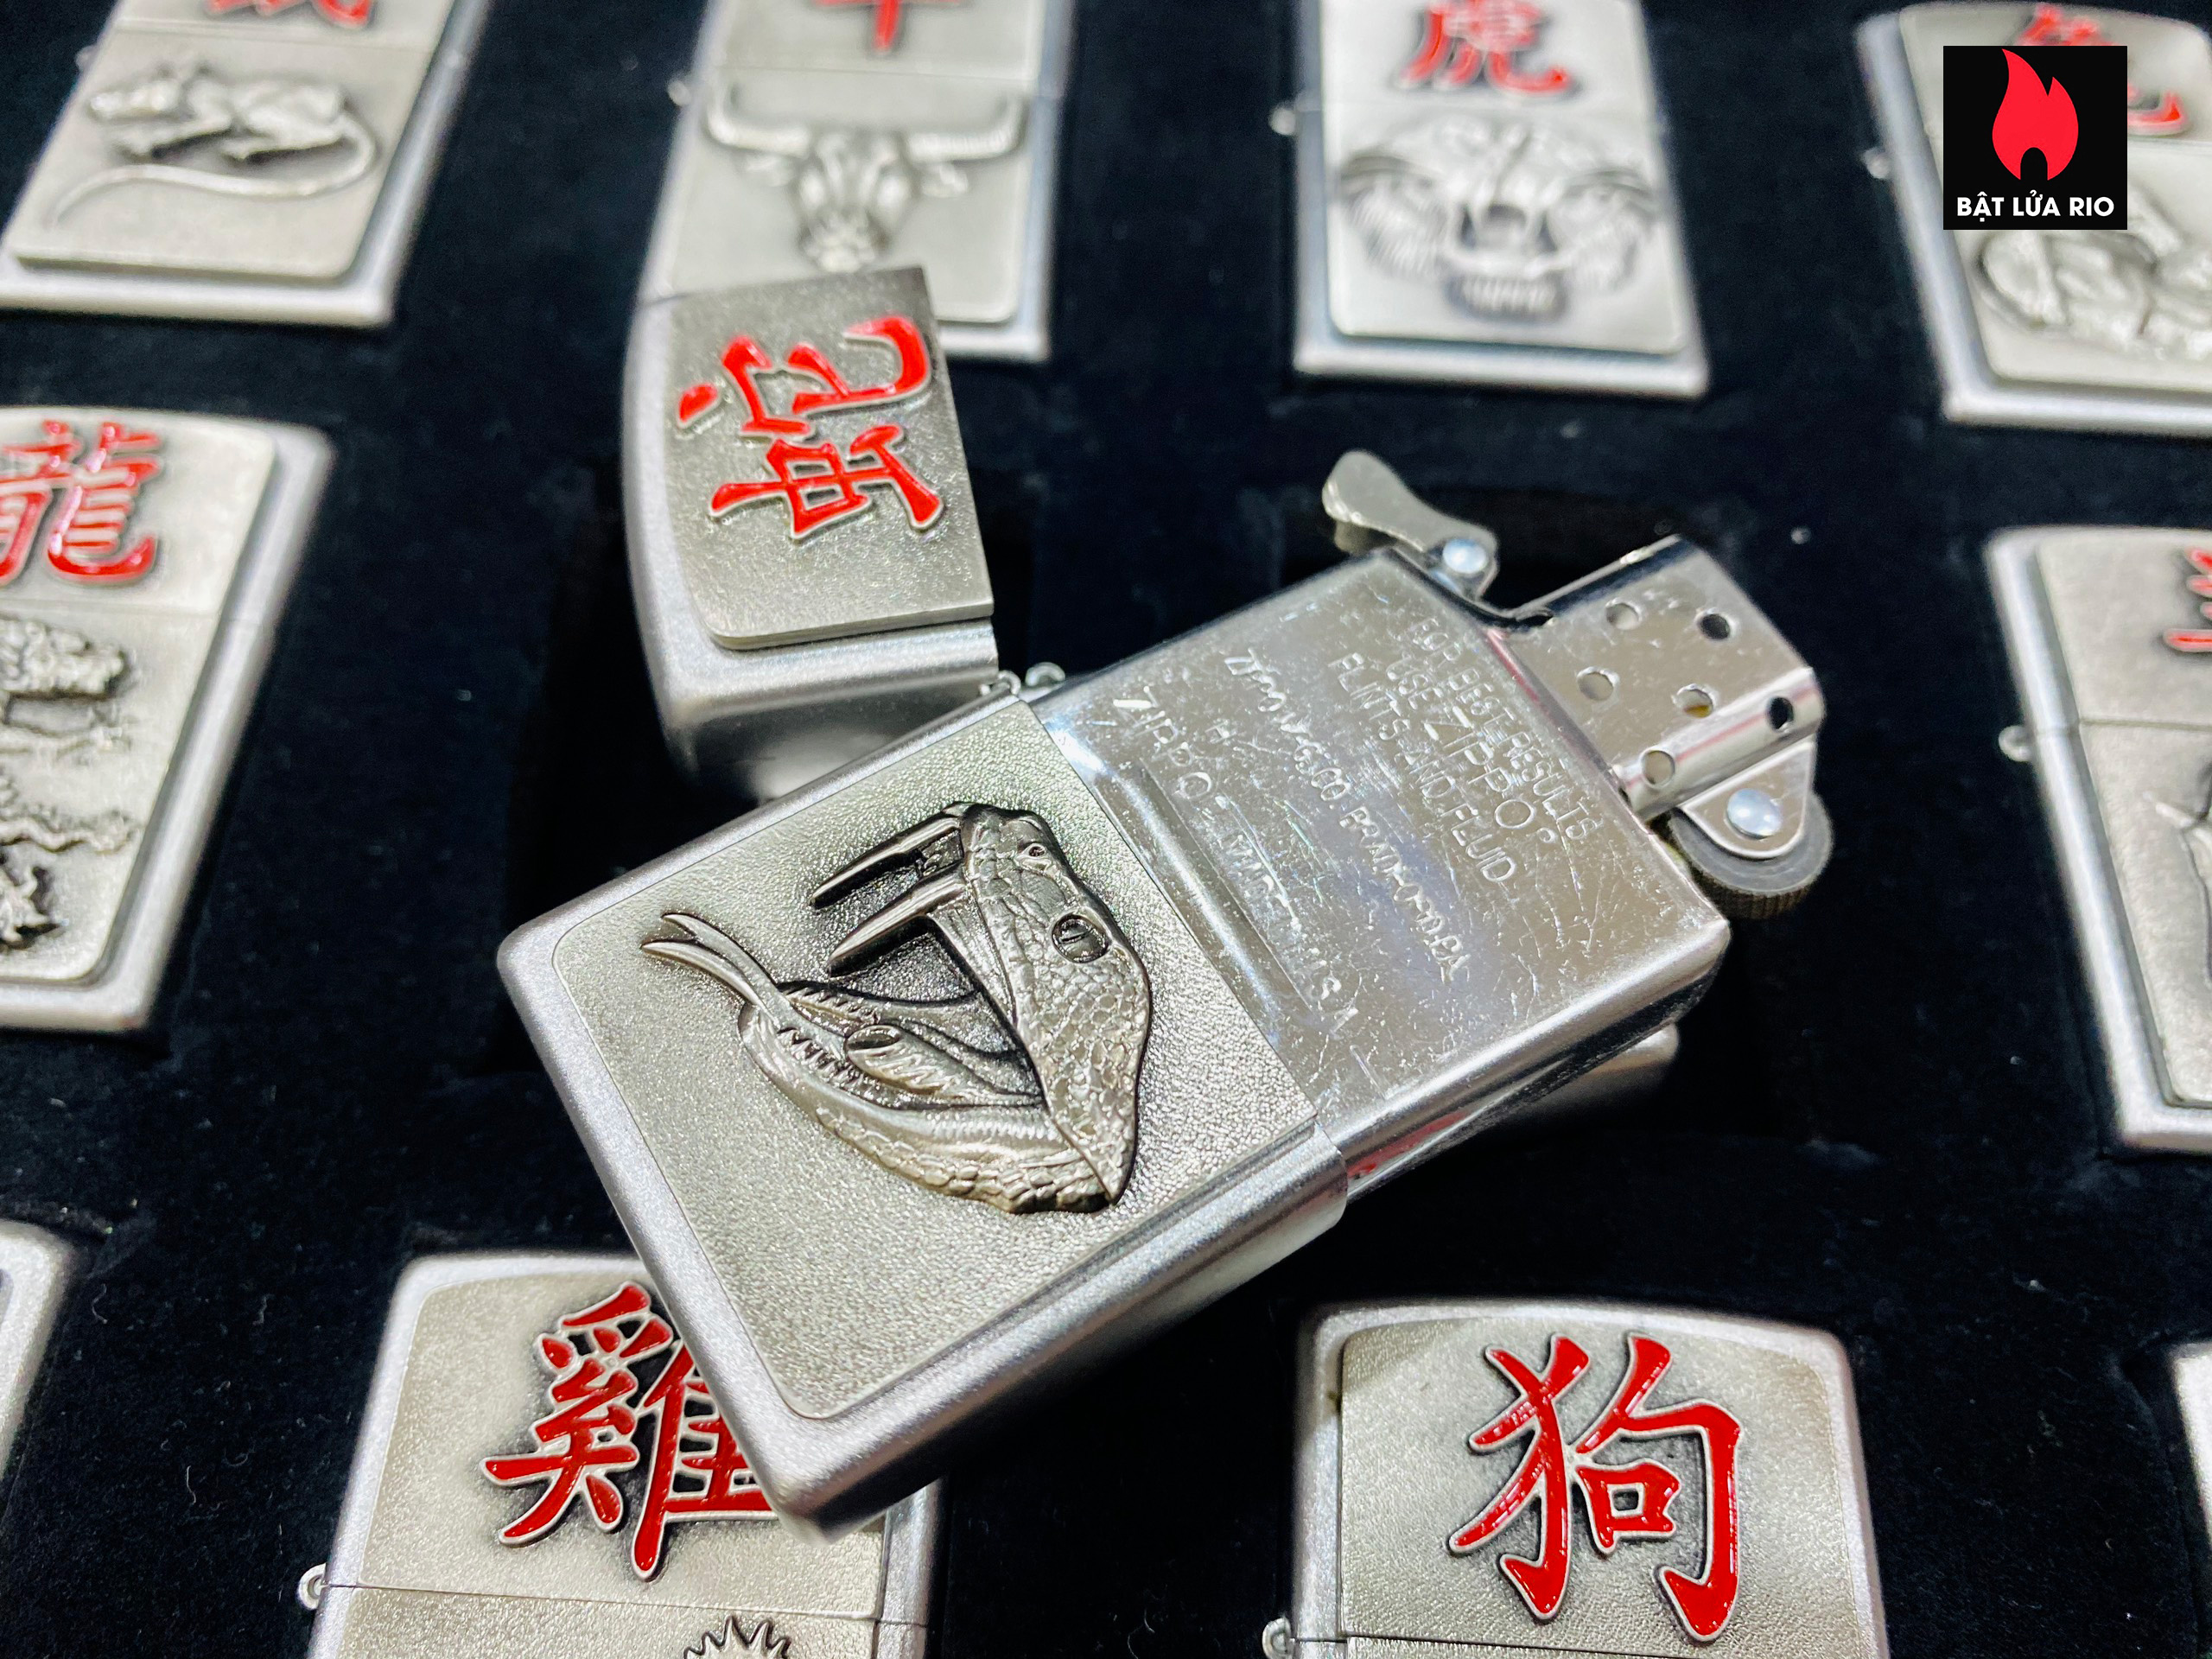 Zippo Set 2010-2011 – Zippo Lighter Collection Chinese Zodiac Set – 12 Con Giáp Châu Á 46